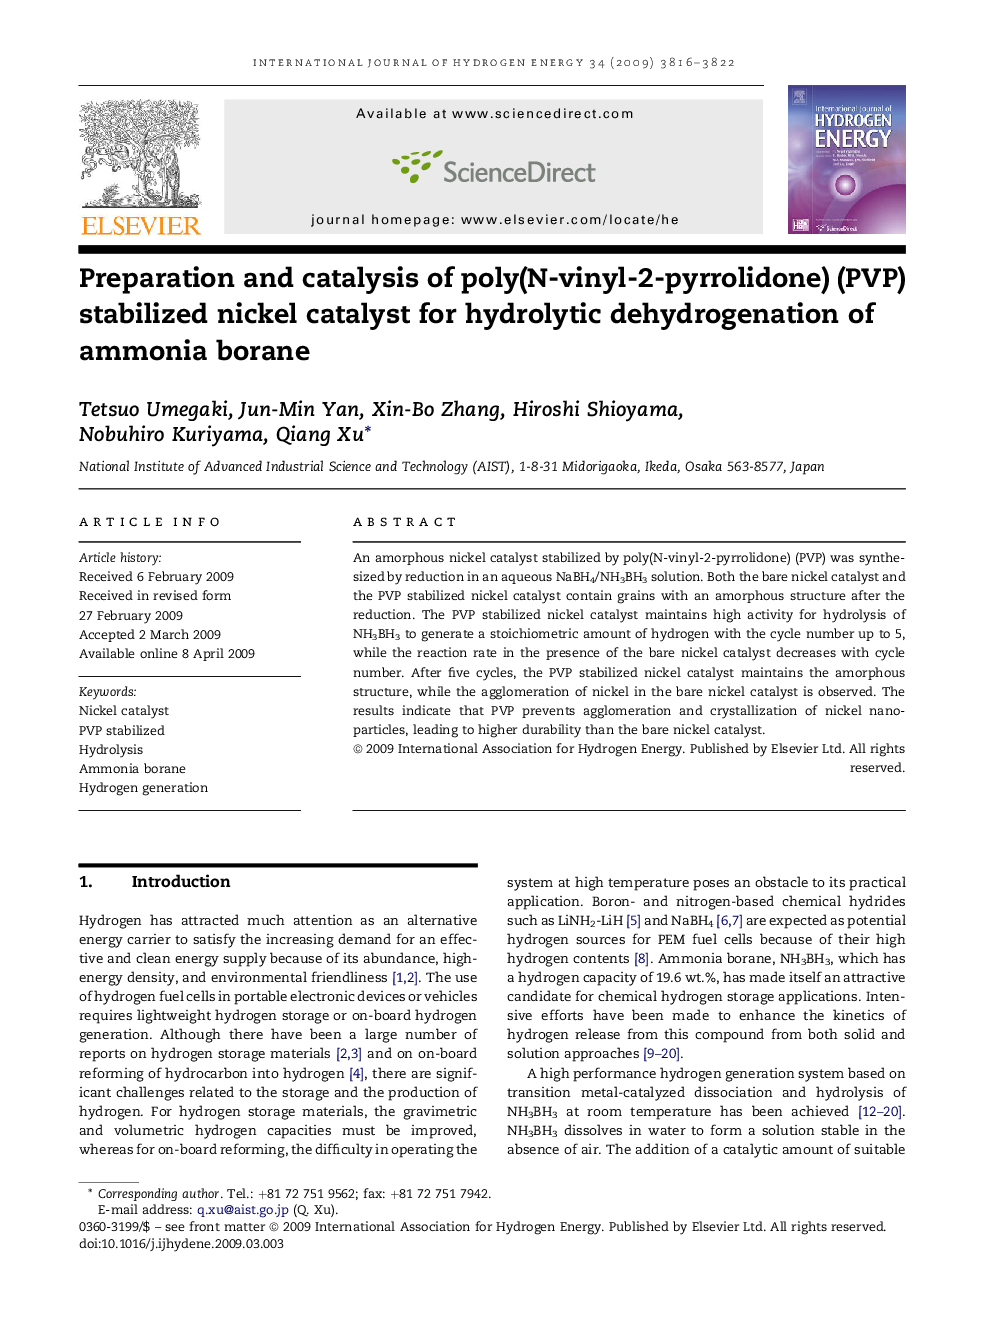 Preparation and catalysis of poly(N-vinyl-2-pyrrolidone) (PVP) stabilized nickel catalyst for hydrolytic dehydrogenation of ammonia borane